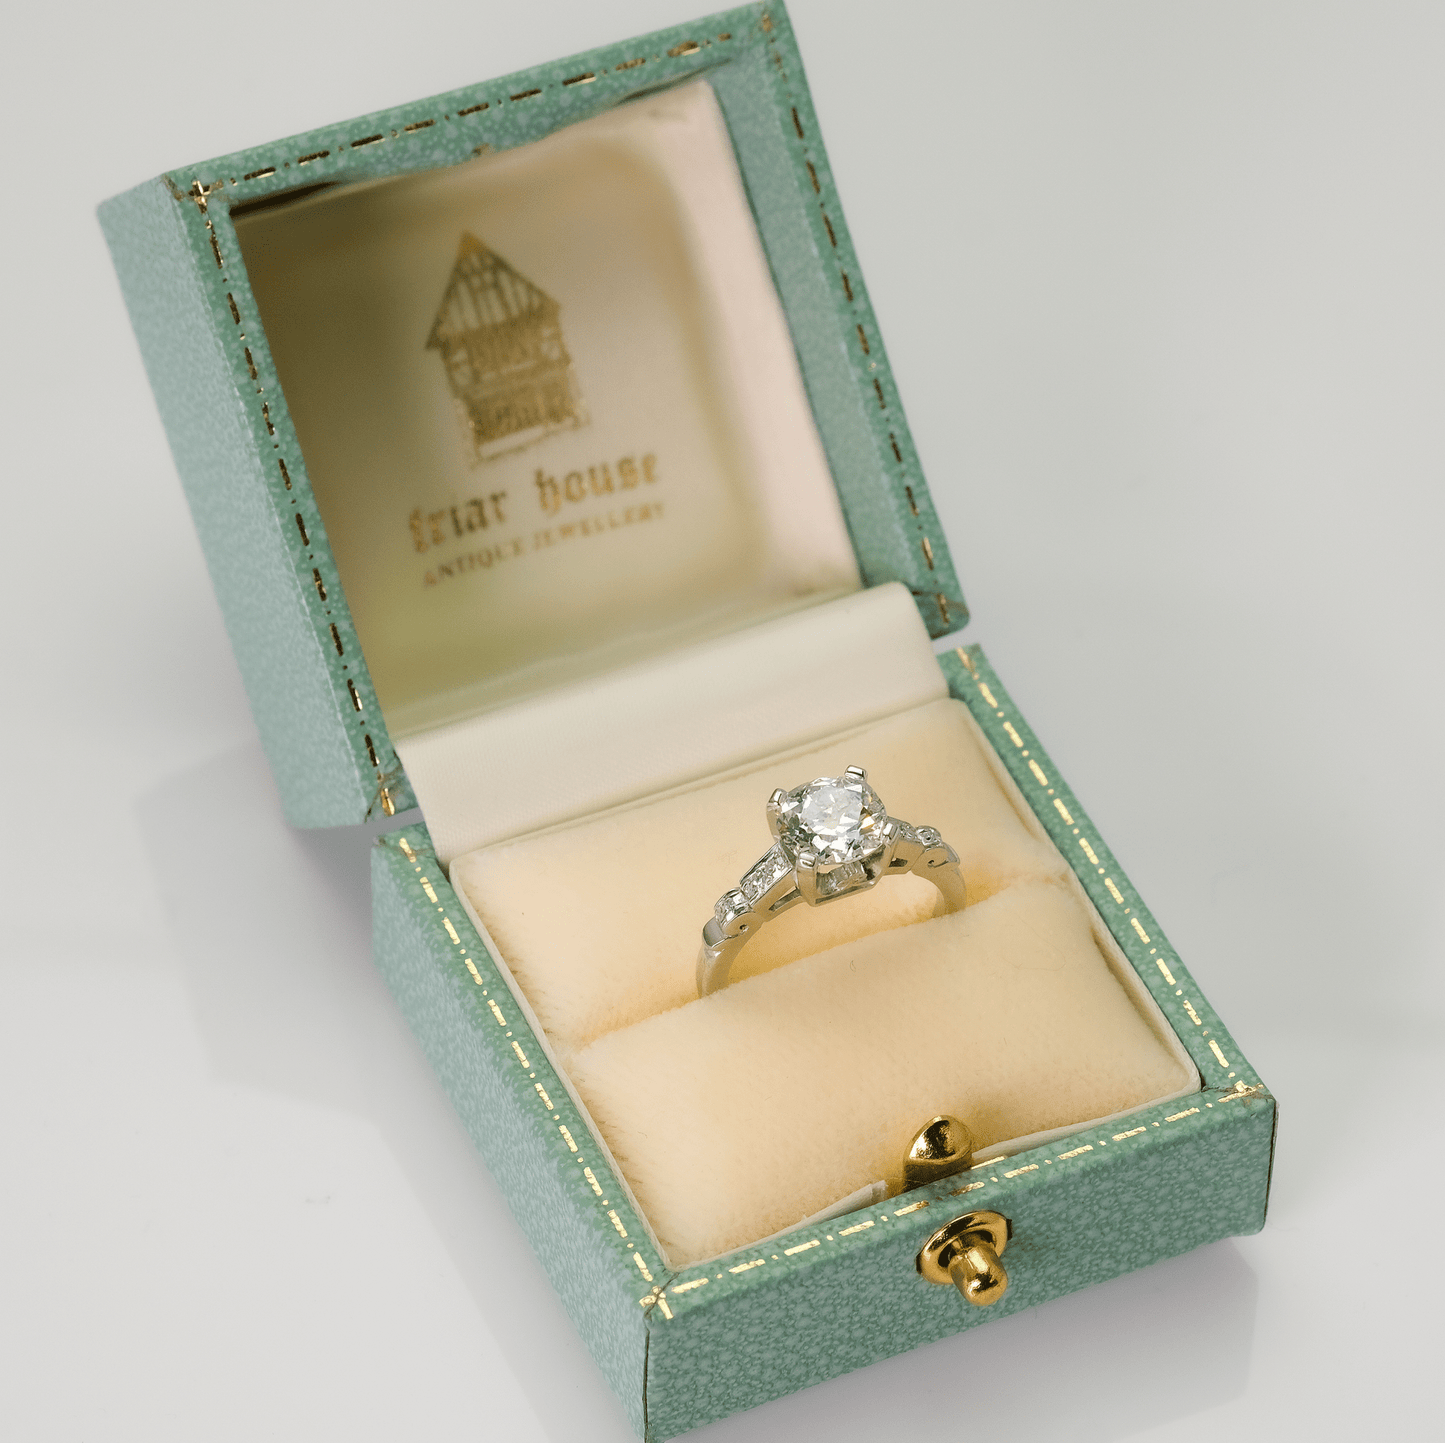 Art Deco Platinum Set Diamond Solitaire Ring 1.71 Carats - Friar House